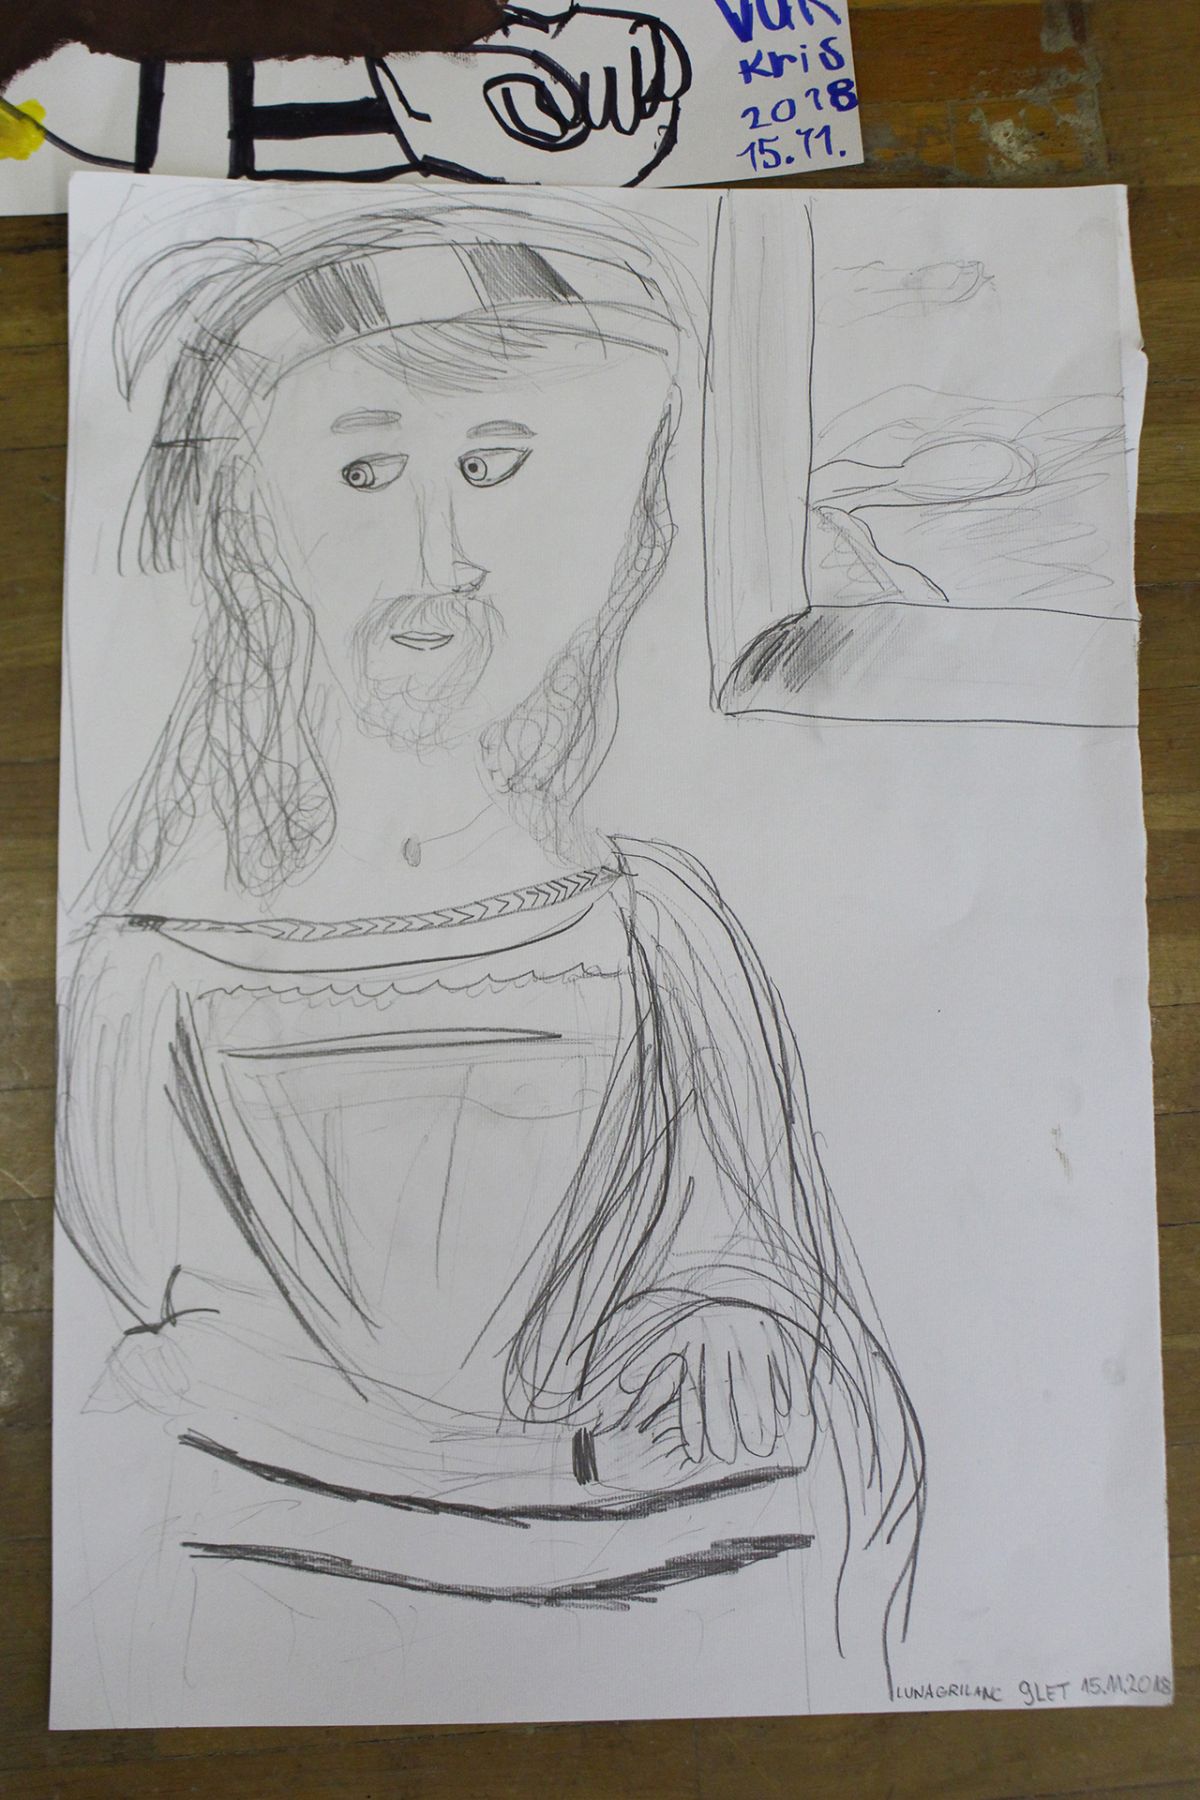 Children drawing the Selfportrait from Albrech Durer.